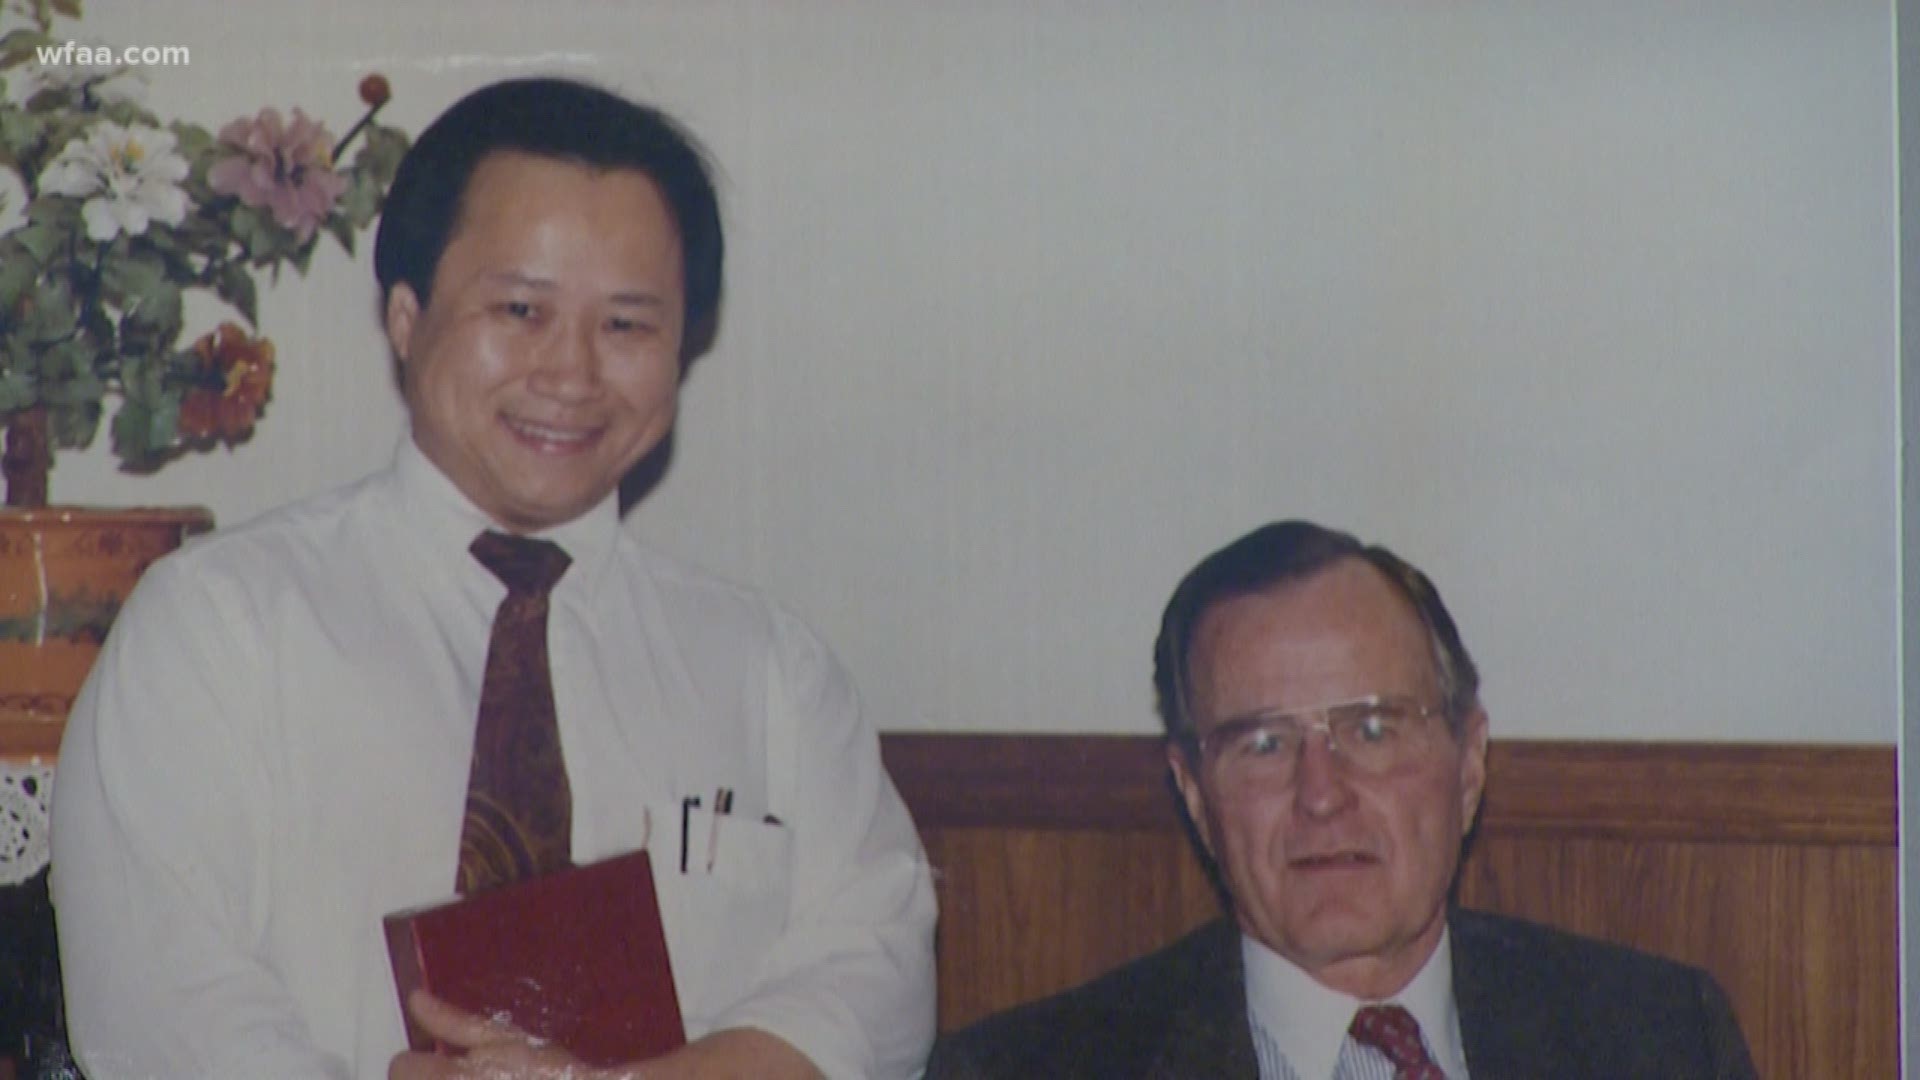 Chinese restaurant remembers President Bush as loyal customer